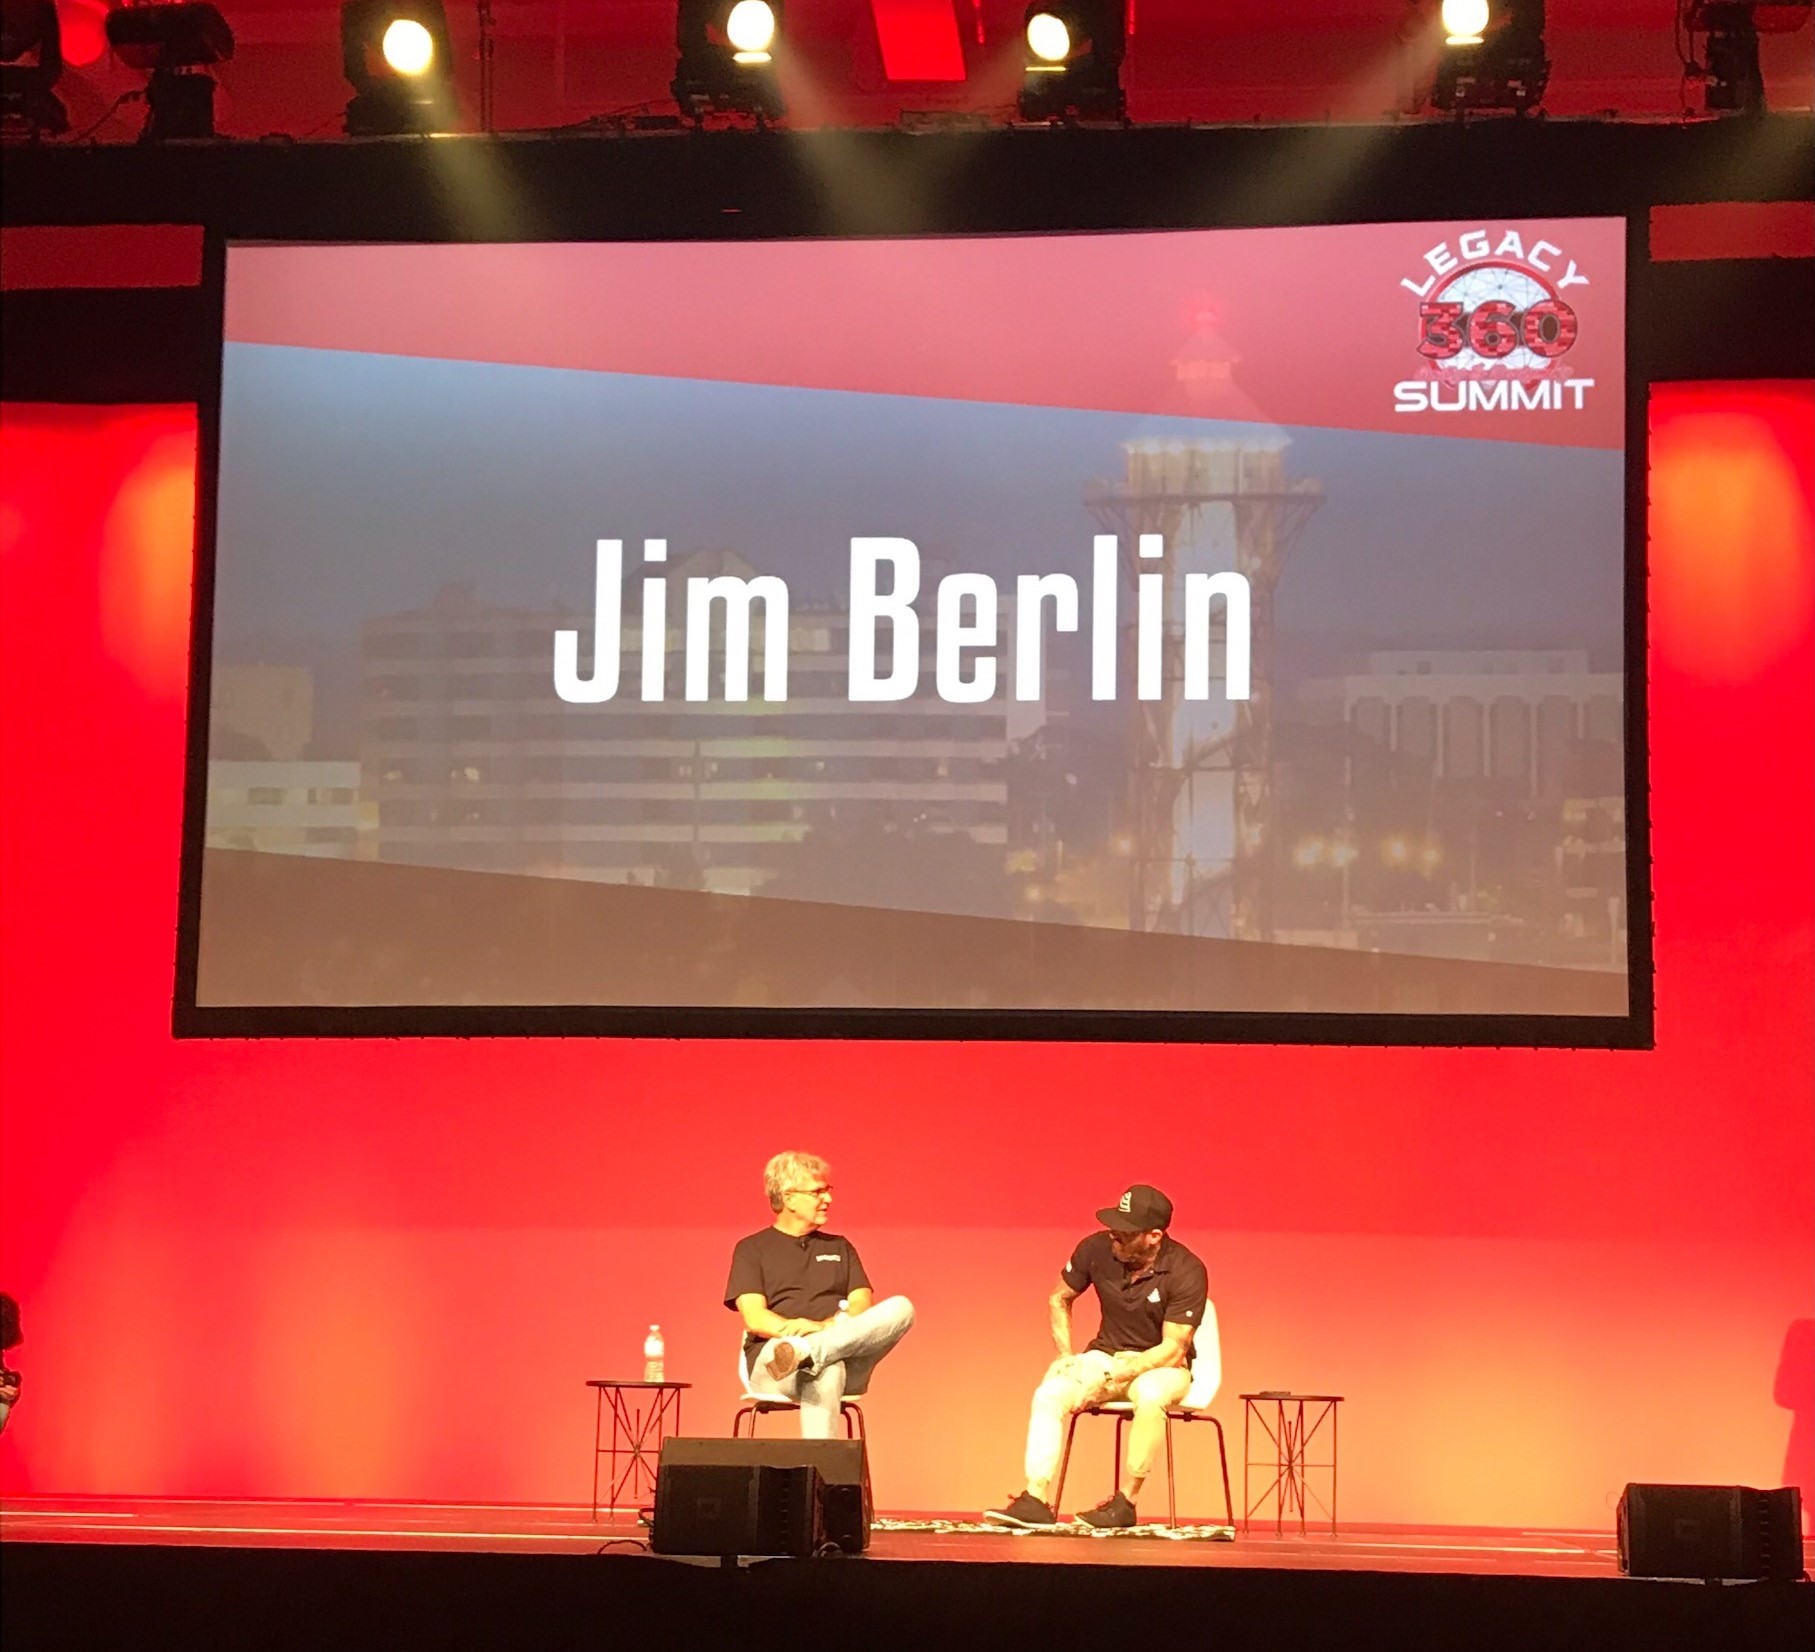 Jim Berlin Legacy 360 Summit